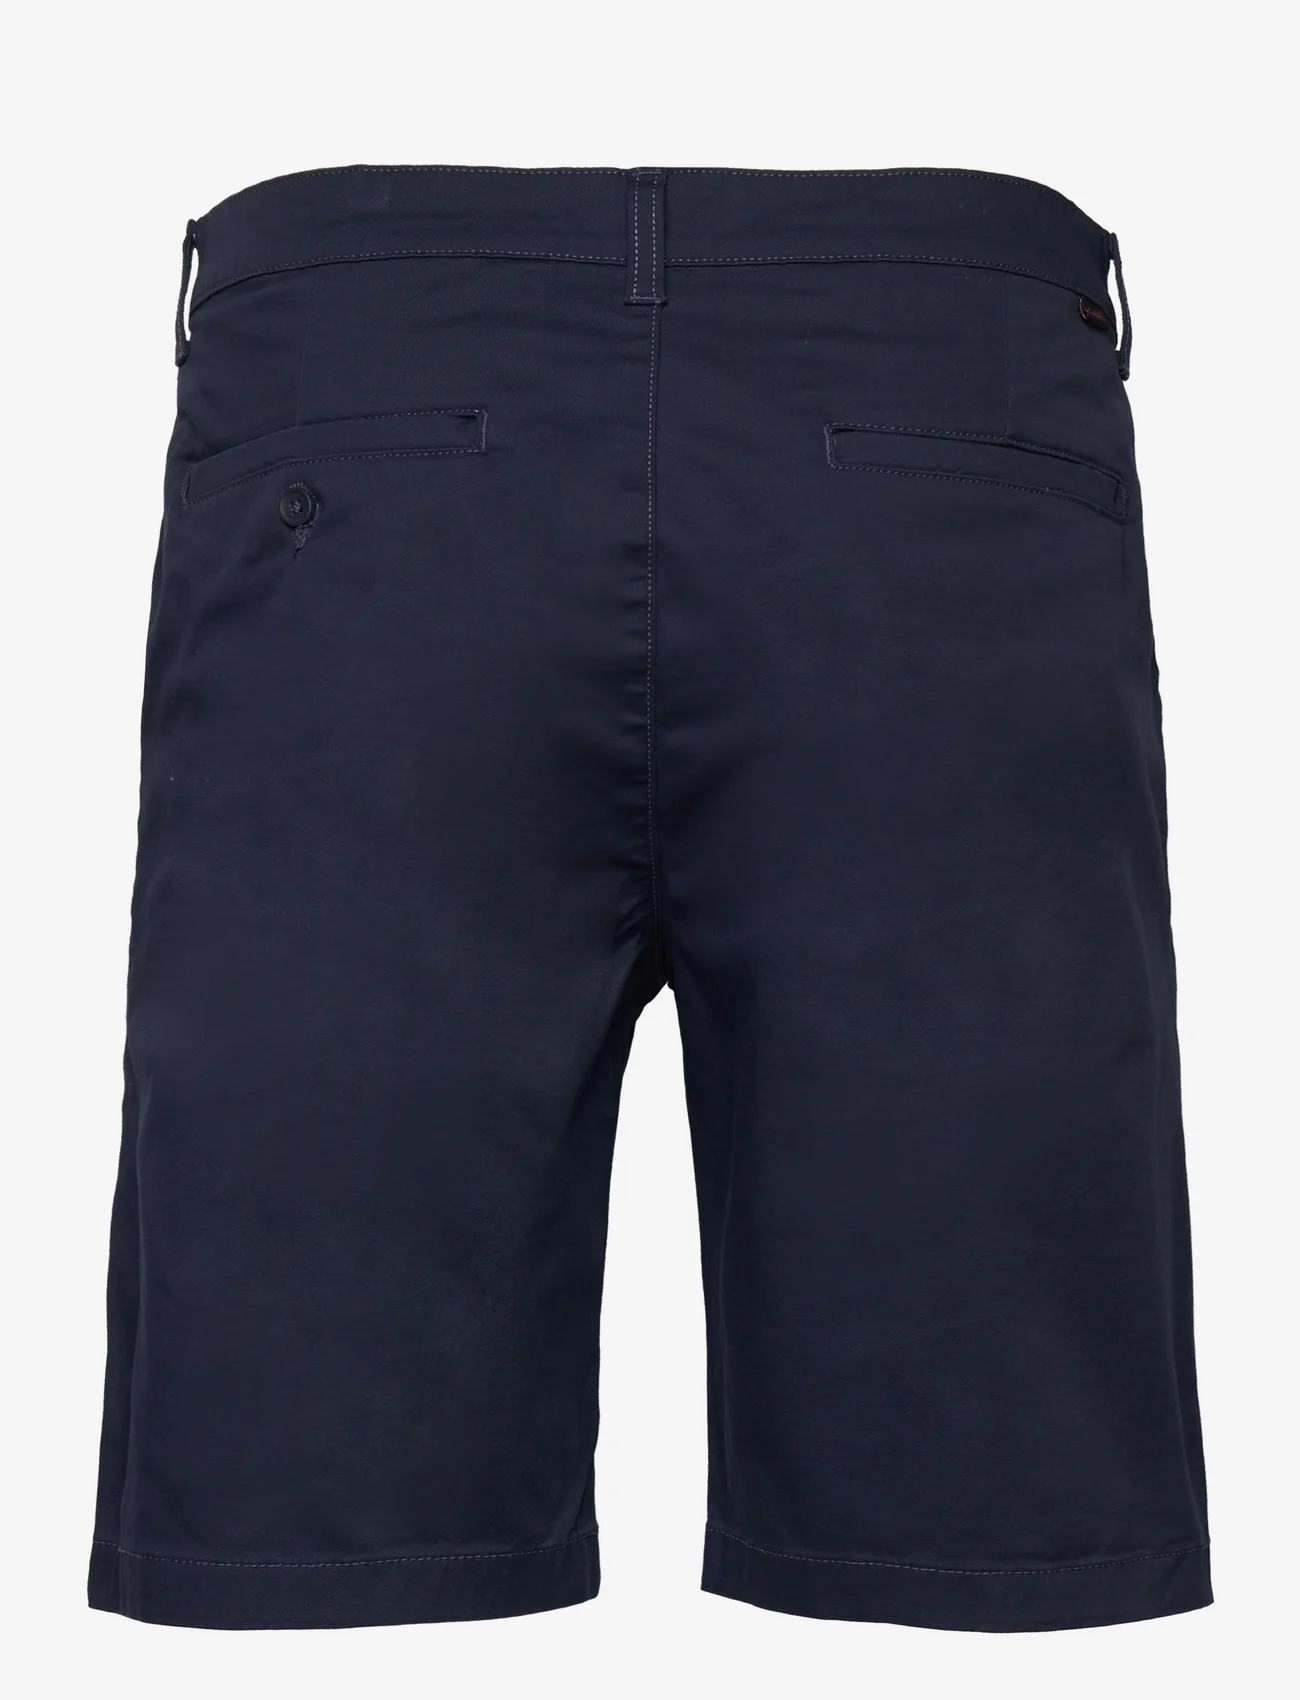 Lee Jeans - REGULAR CHINO SHORT - chino stila bikses - deep navy - 1